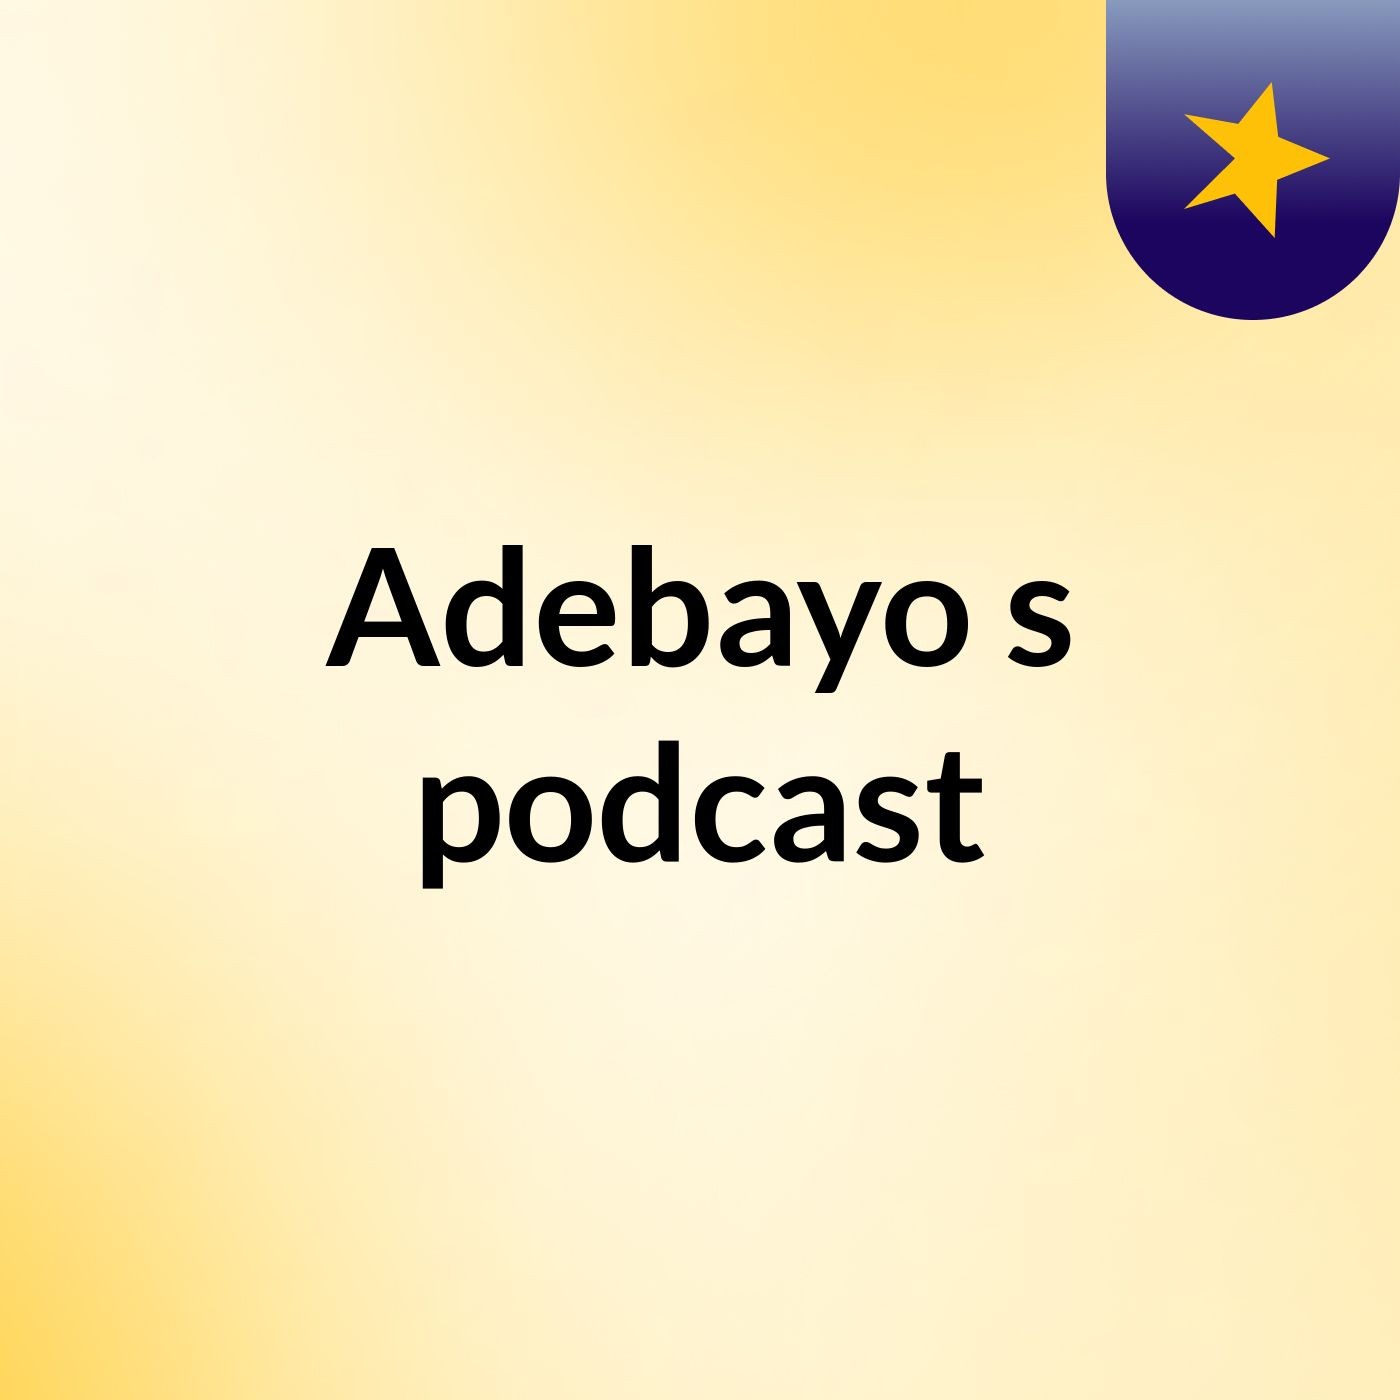 Adebayo's podcast